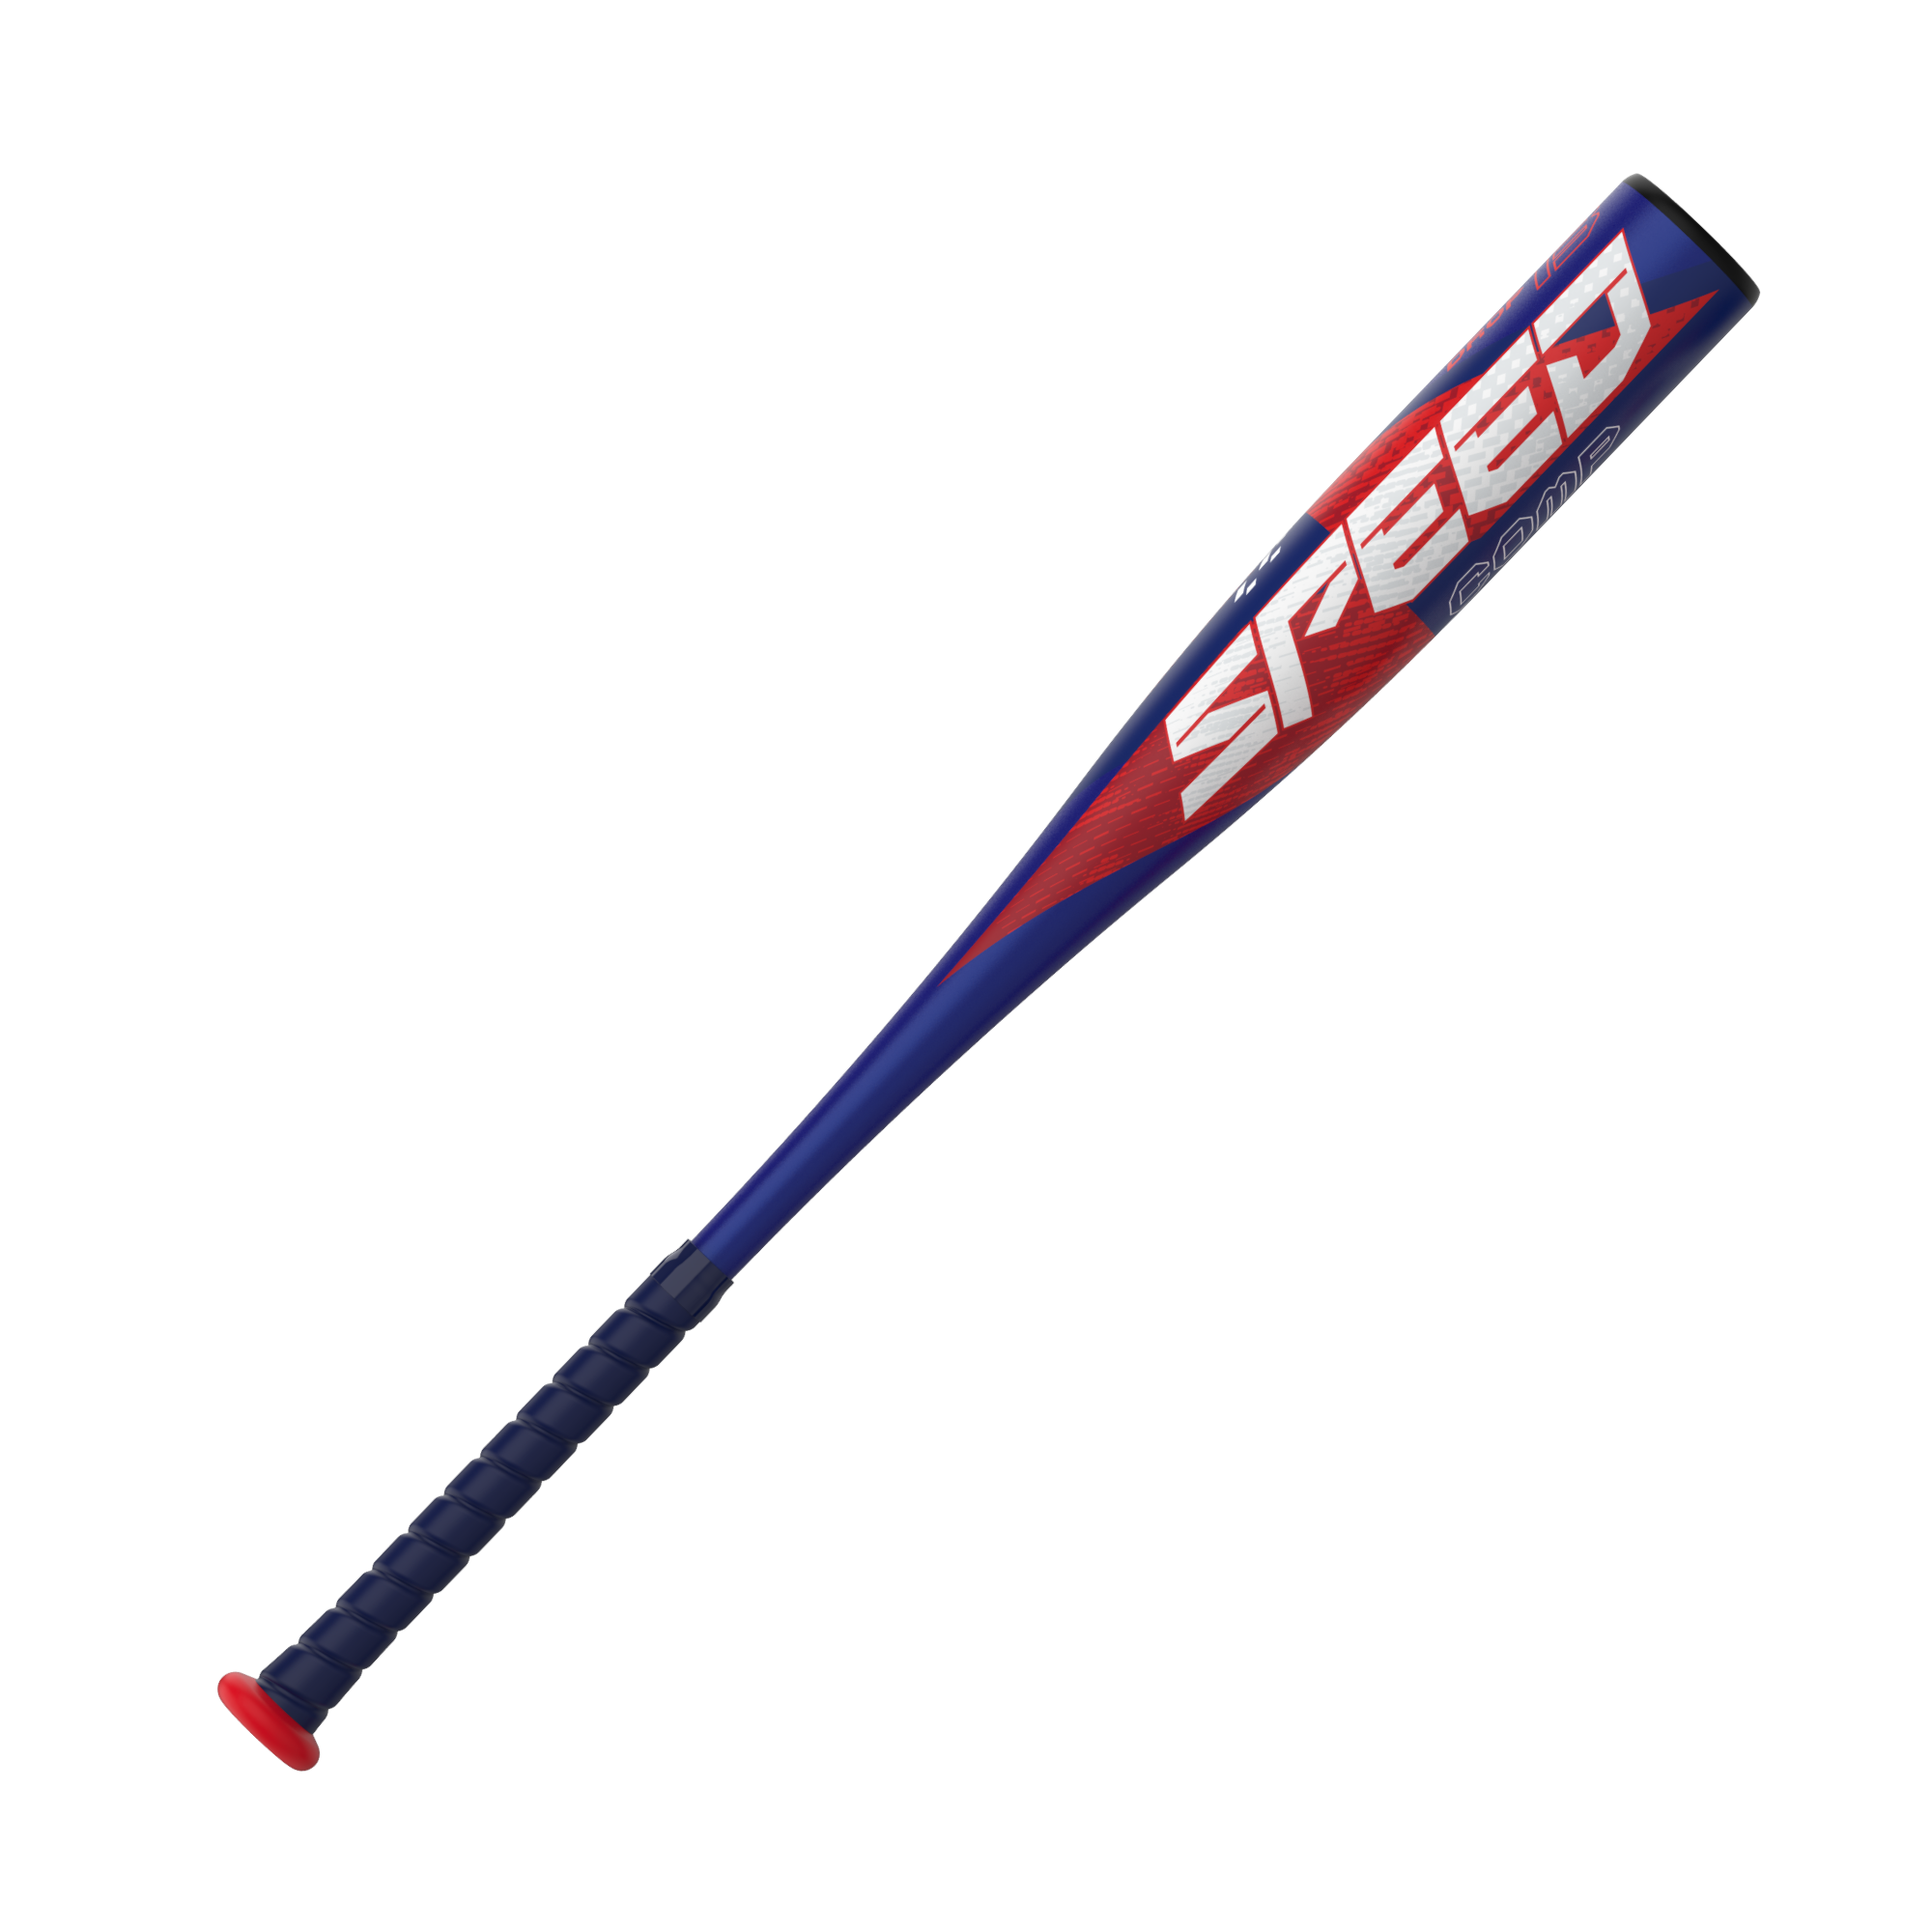 Easton Speed Comp -13 (2  5/8"  Barrel) USA Youth Baseball Bat